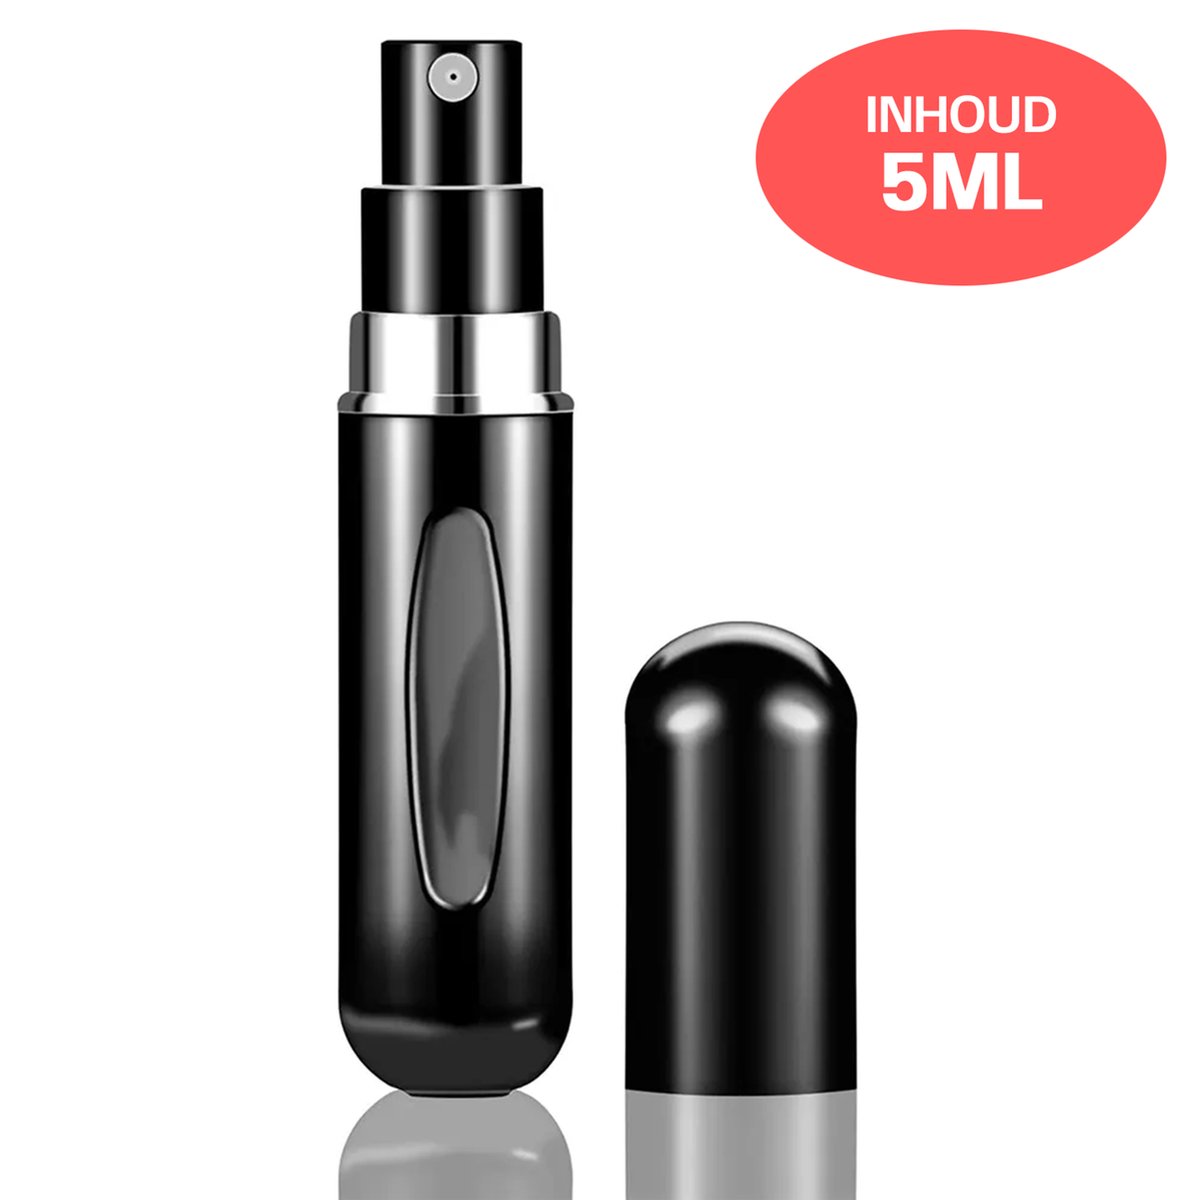 BukkitBow - Parfum Verstuiver - Mini Parfum Flesje – Navulbaar 5 ml Parfumflesje – Compact Reisflesje - Zwart - Leuk Kerstcadeau